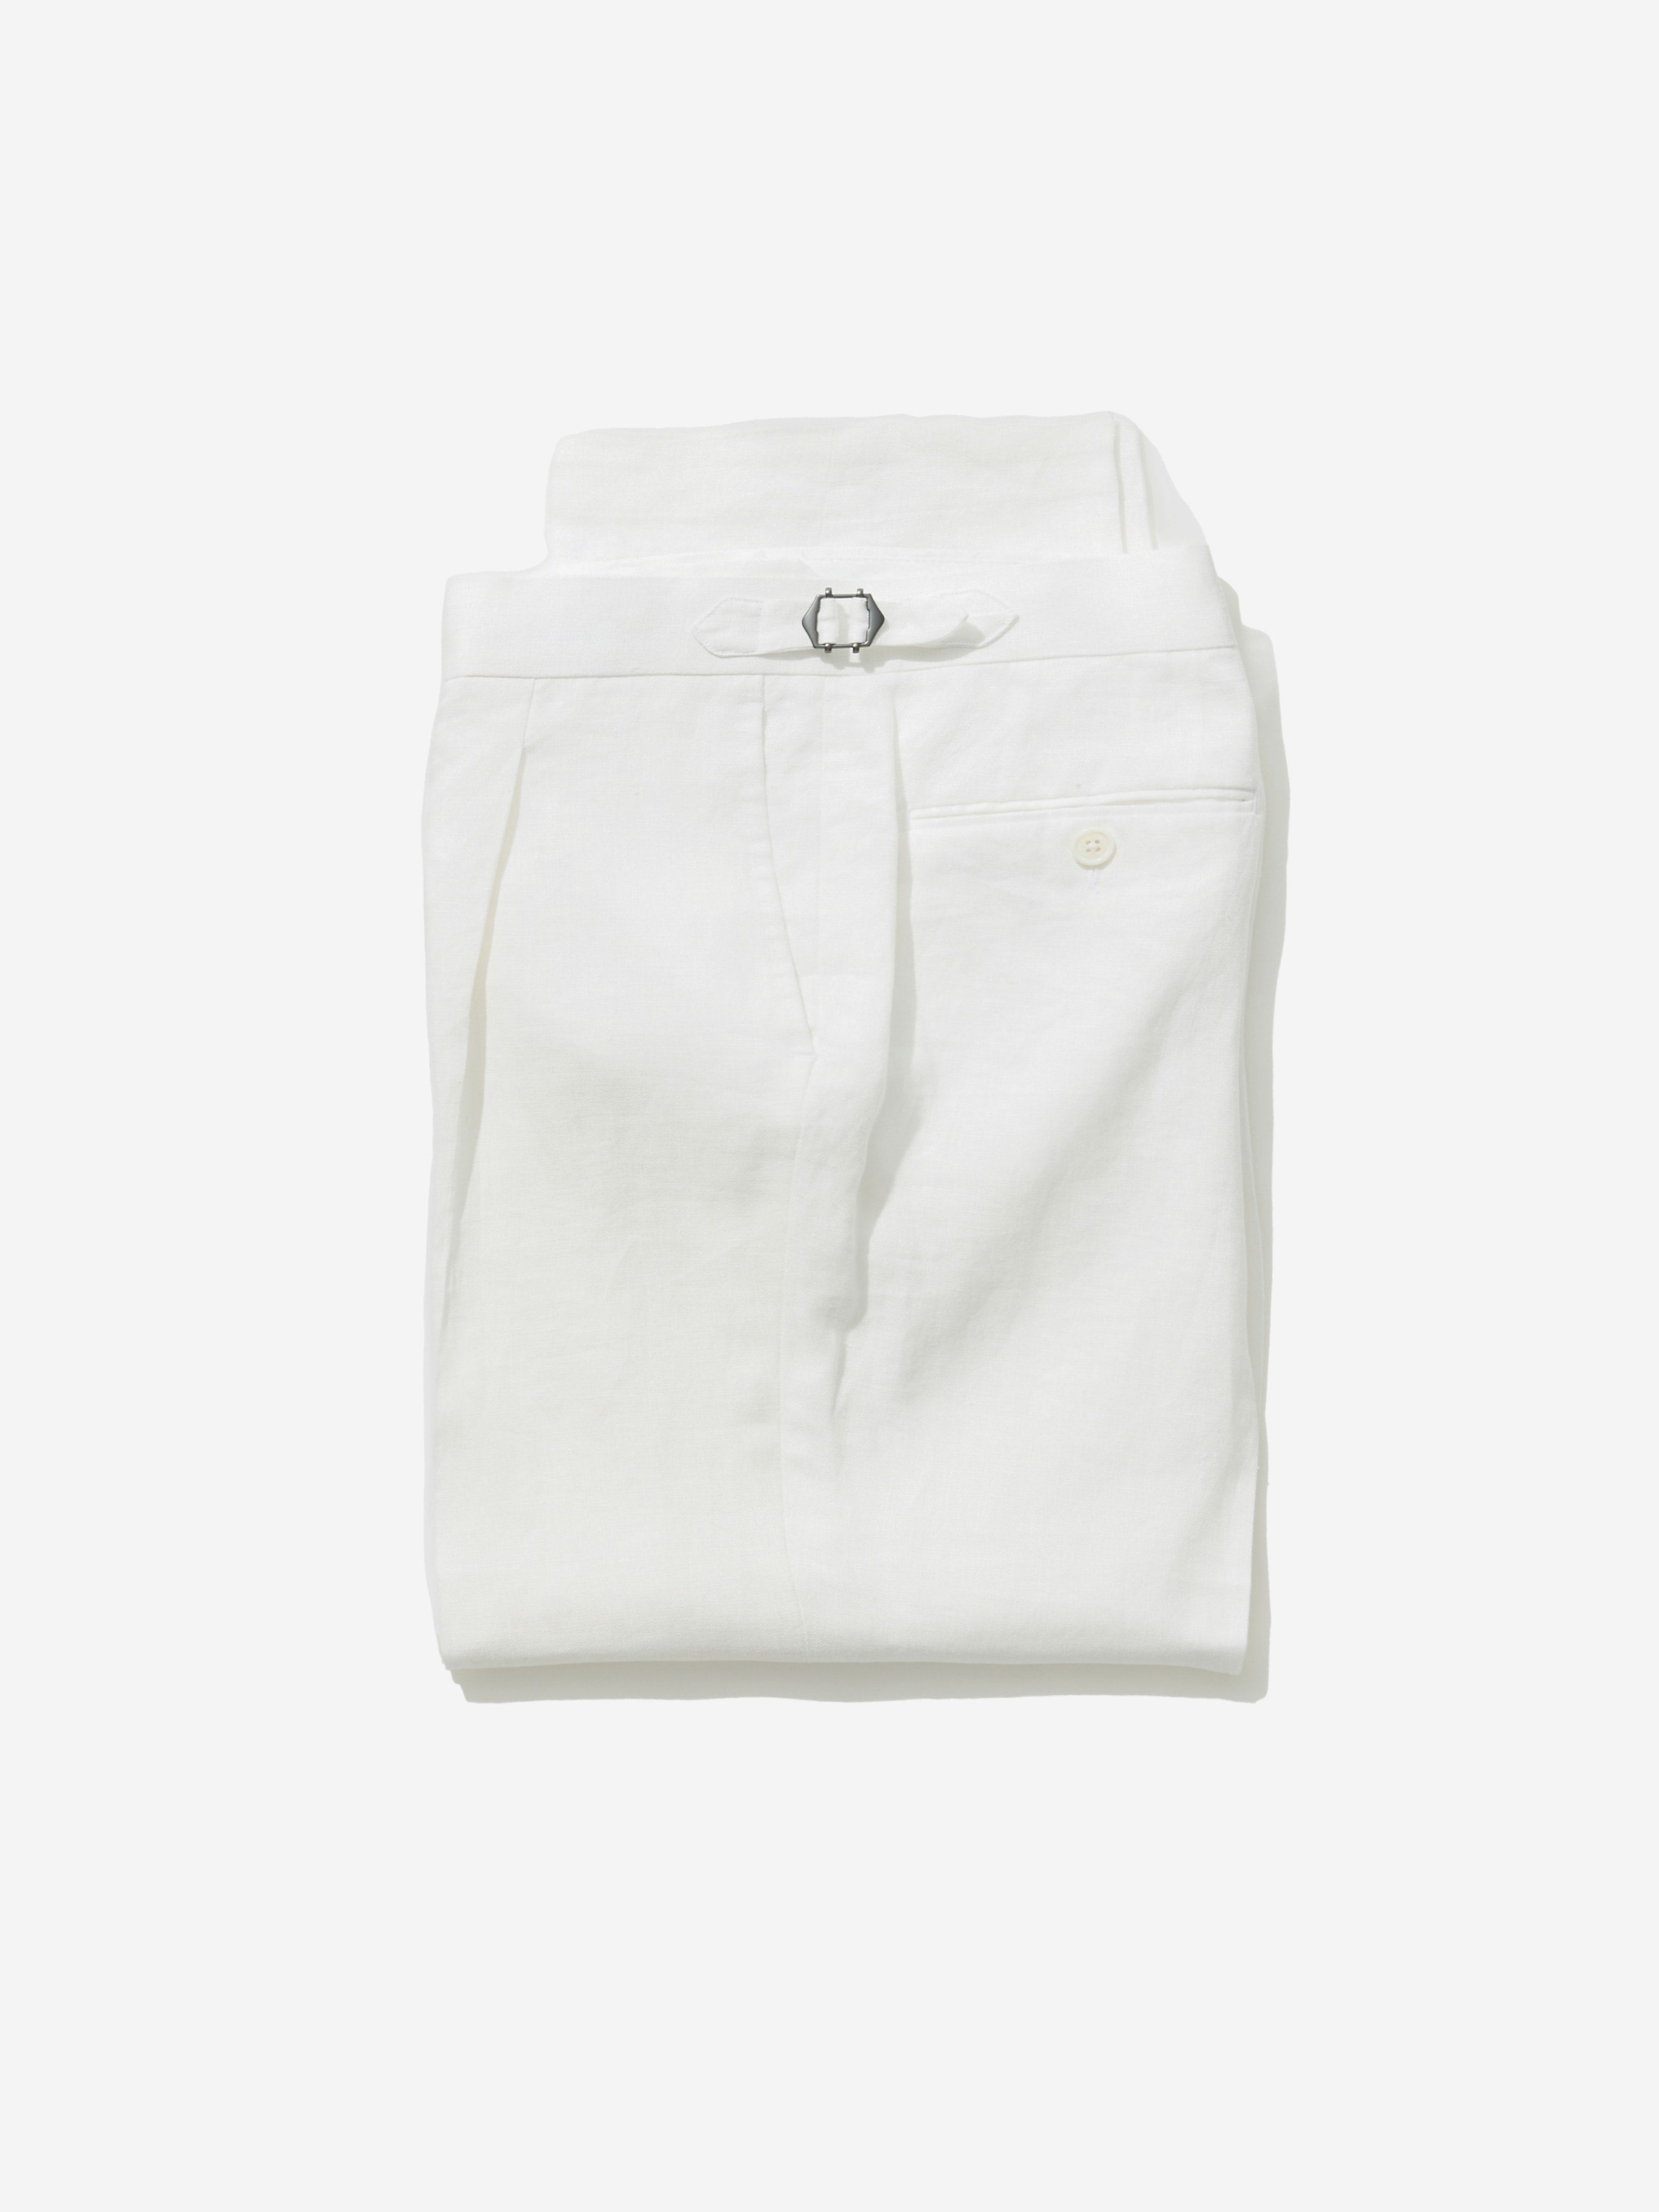 White Linen Oscar Trousers (Wide Fit) - Grand Le Mar